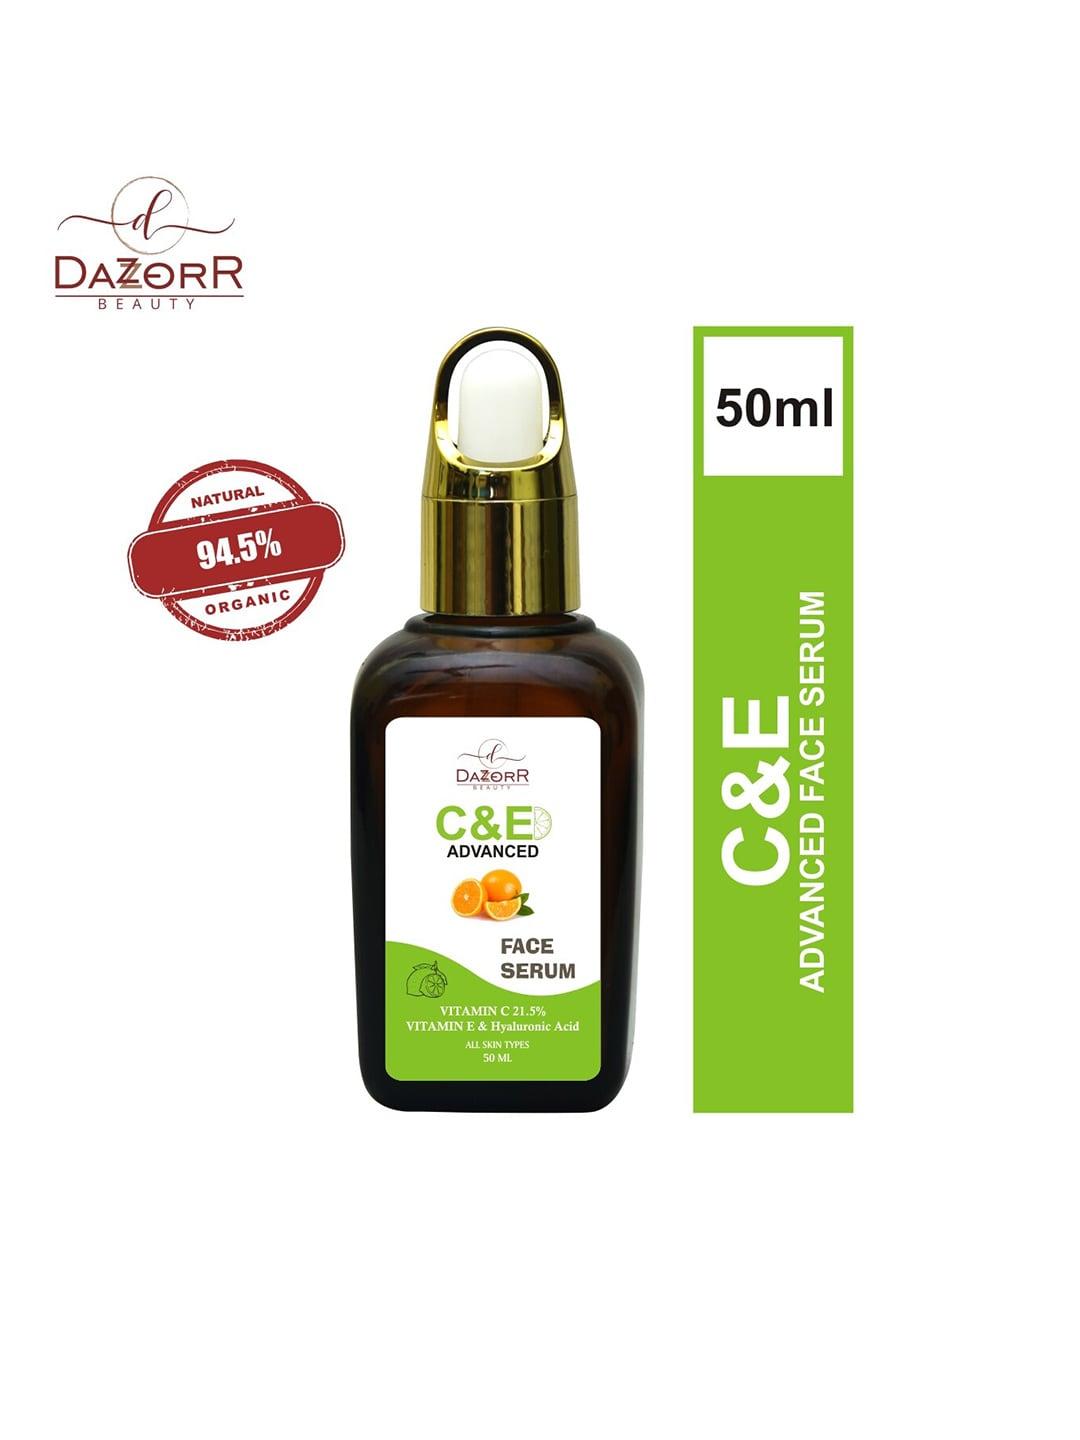 DAZORR BEAUTY Kumkumadi Vitamin C & E Face Serum For Skin Whitening And Skin Purify,All Skin Type,50ml